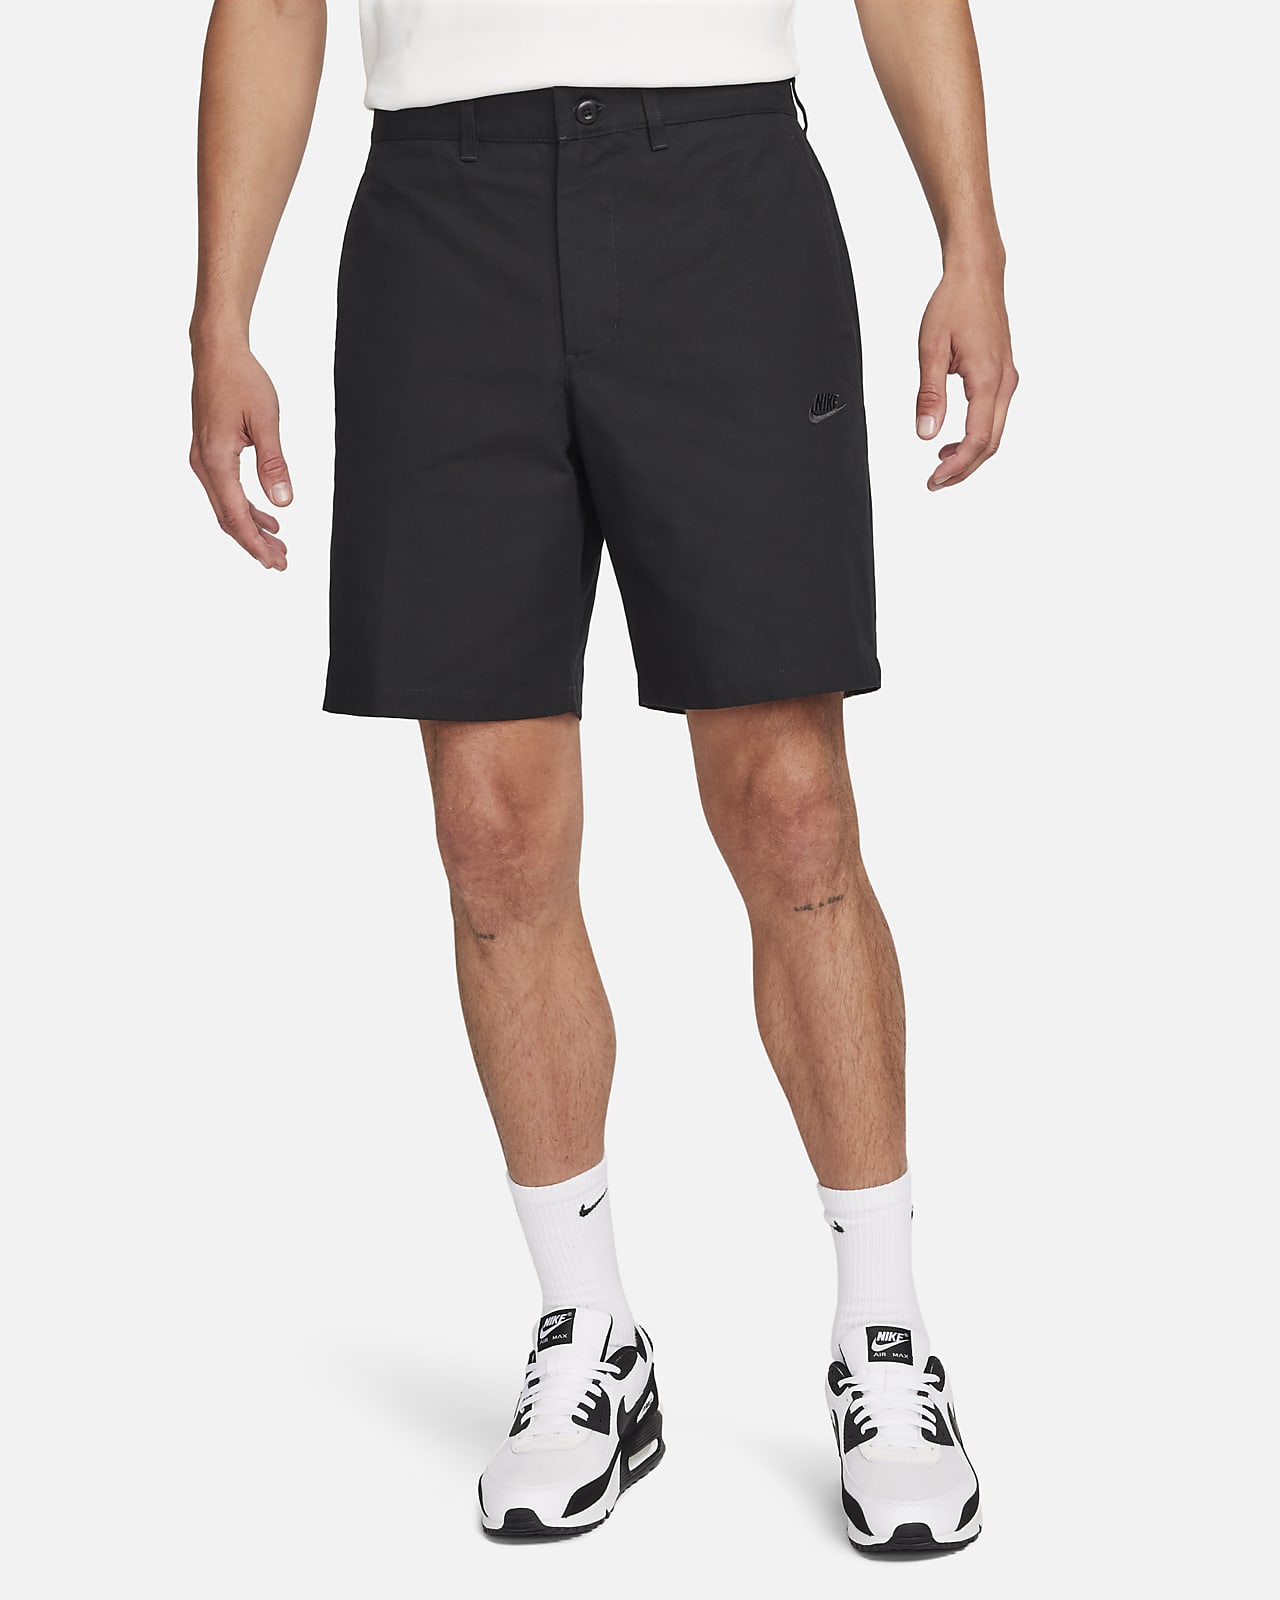 Shorts chinos para hombre Nike Club